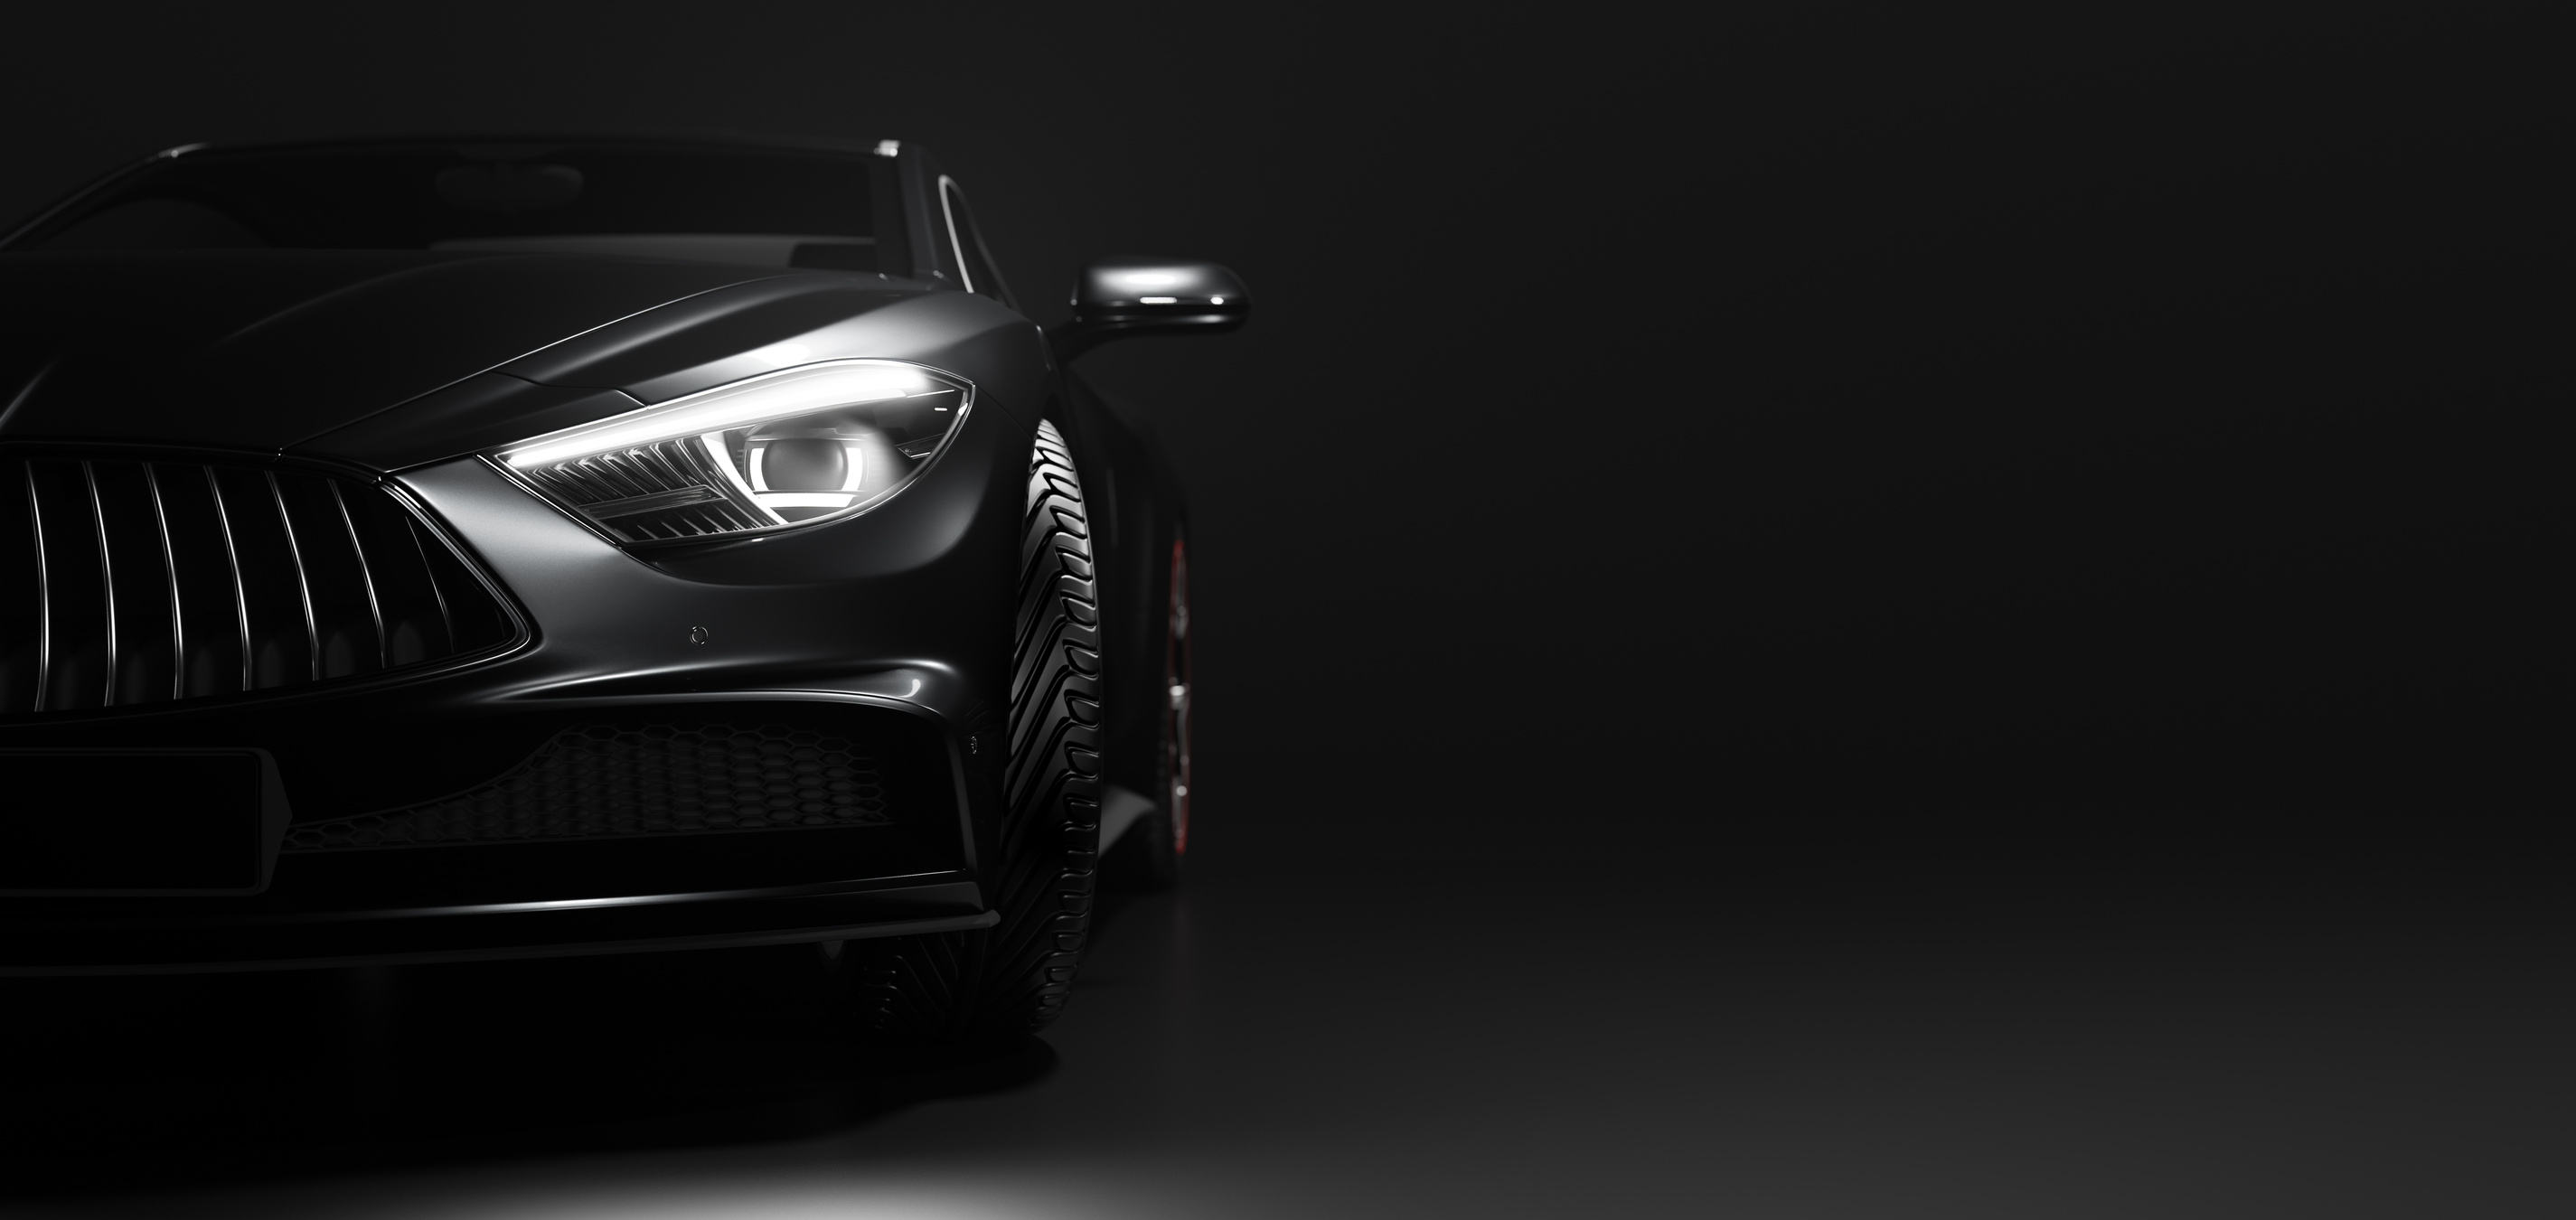 New Luxury Car on Black Background